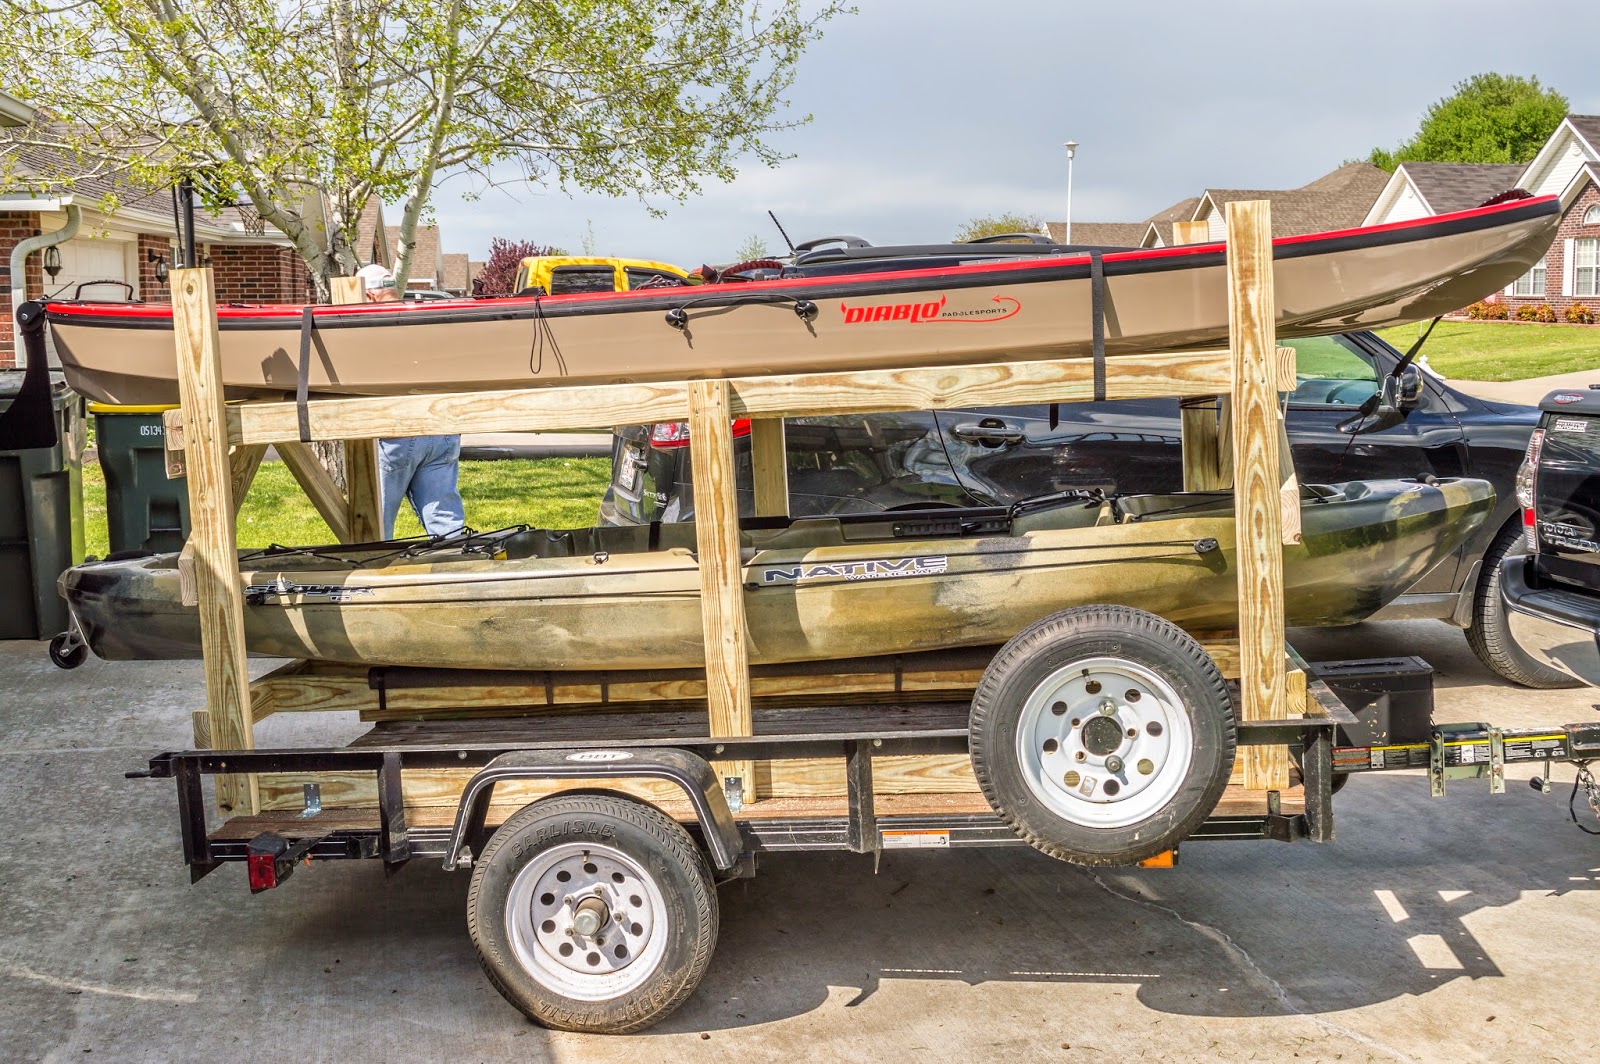 Northwest Arkansas Fly Fishing Journal: Kayak Trailer